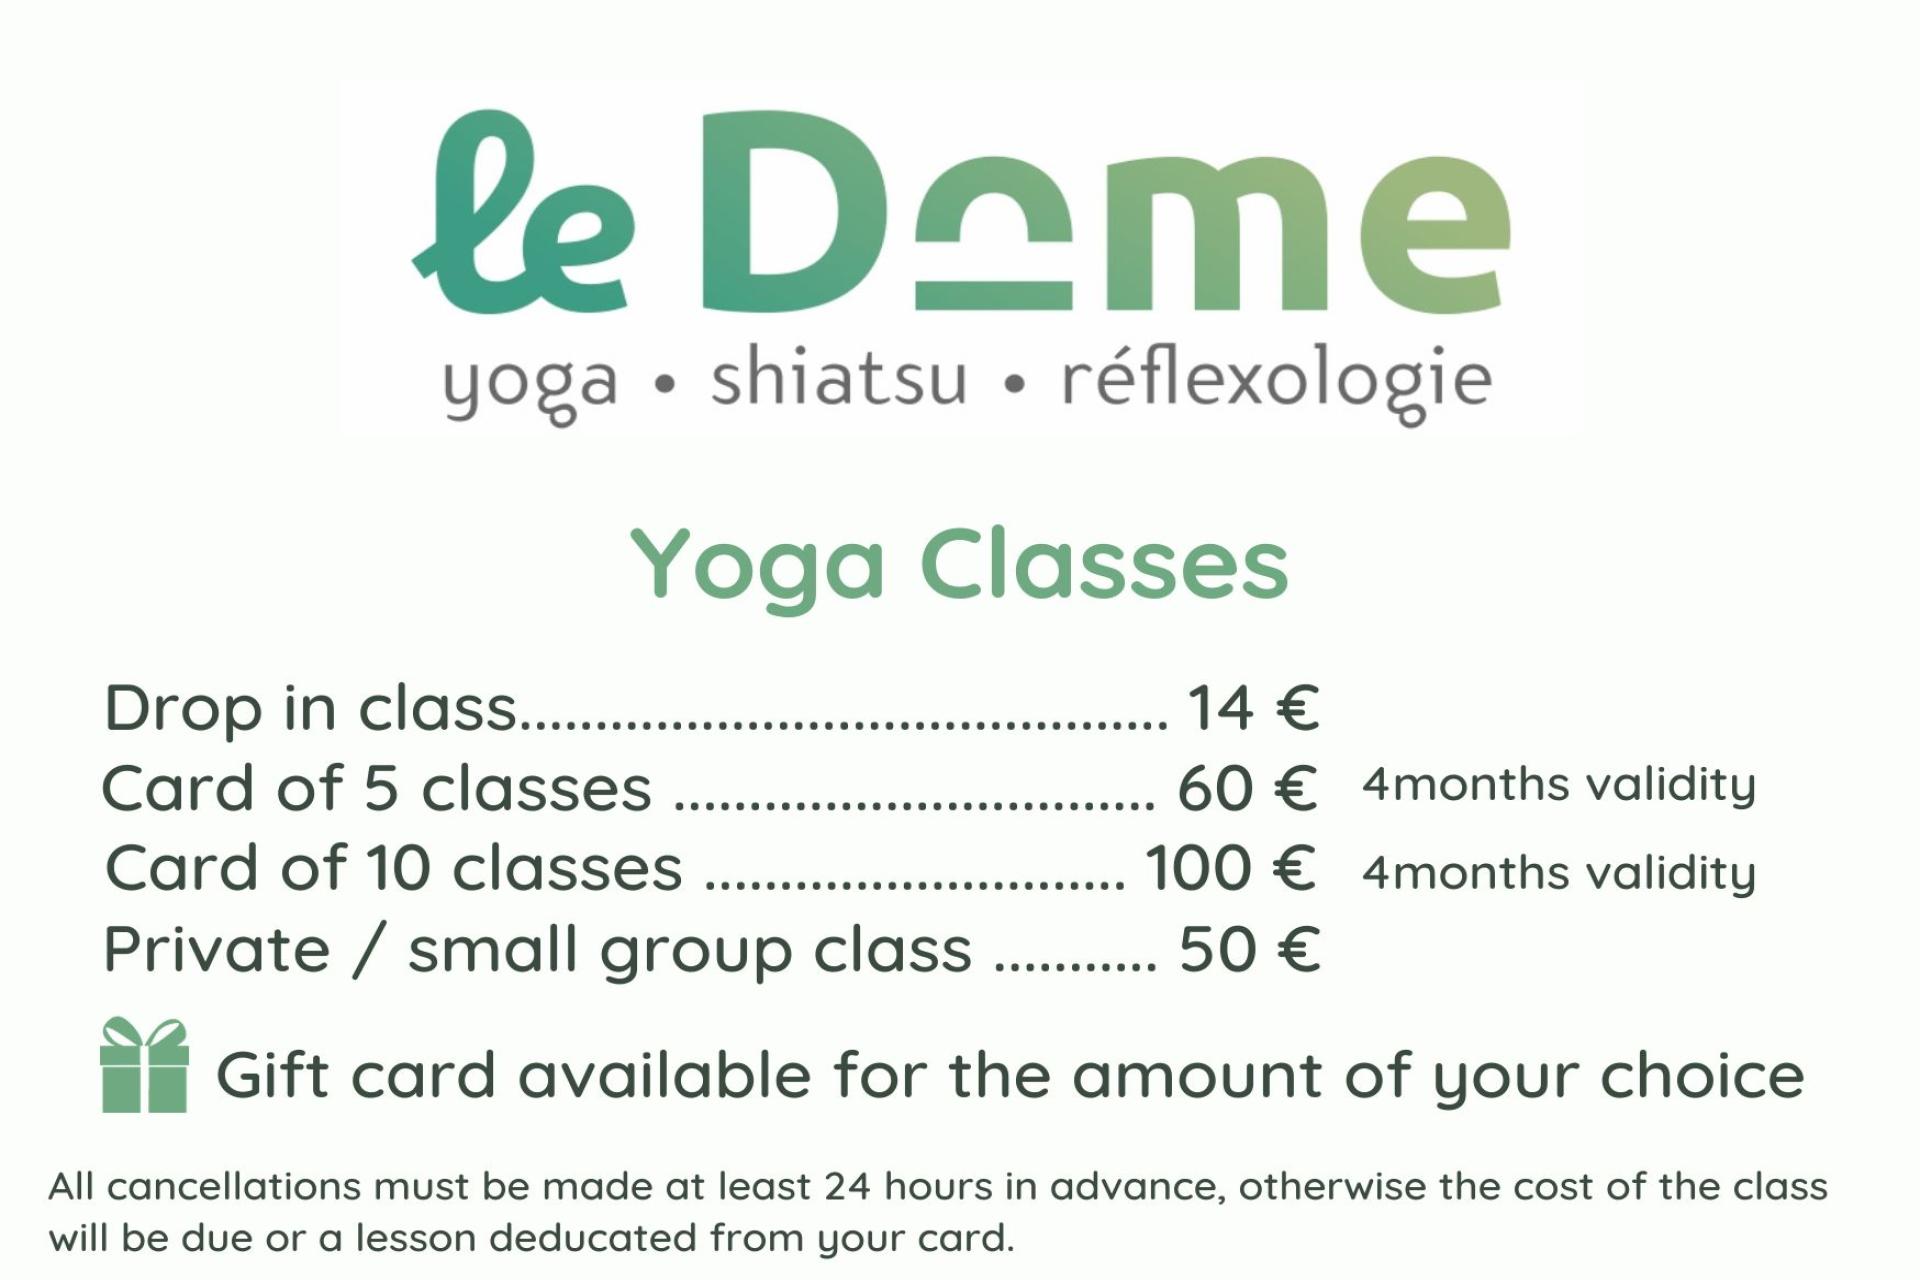 Pricing list yoga classes and shiatsu - foot reflexology treatments